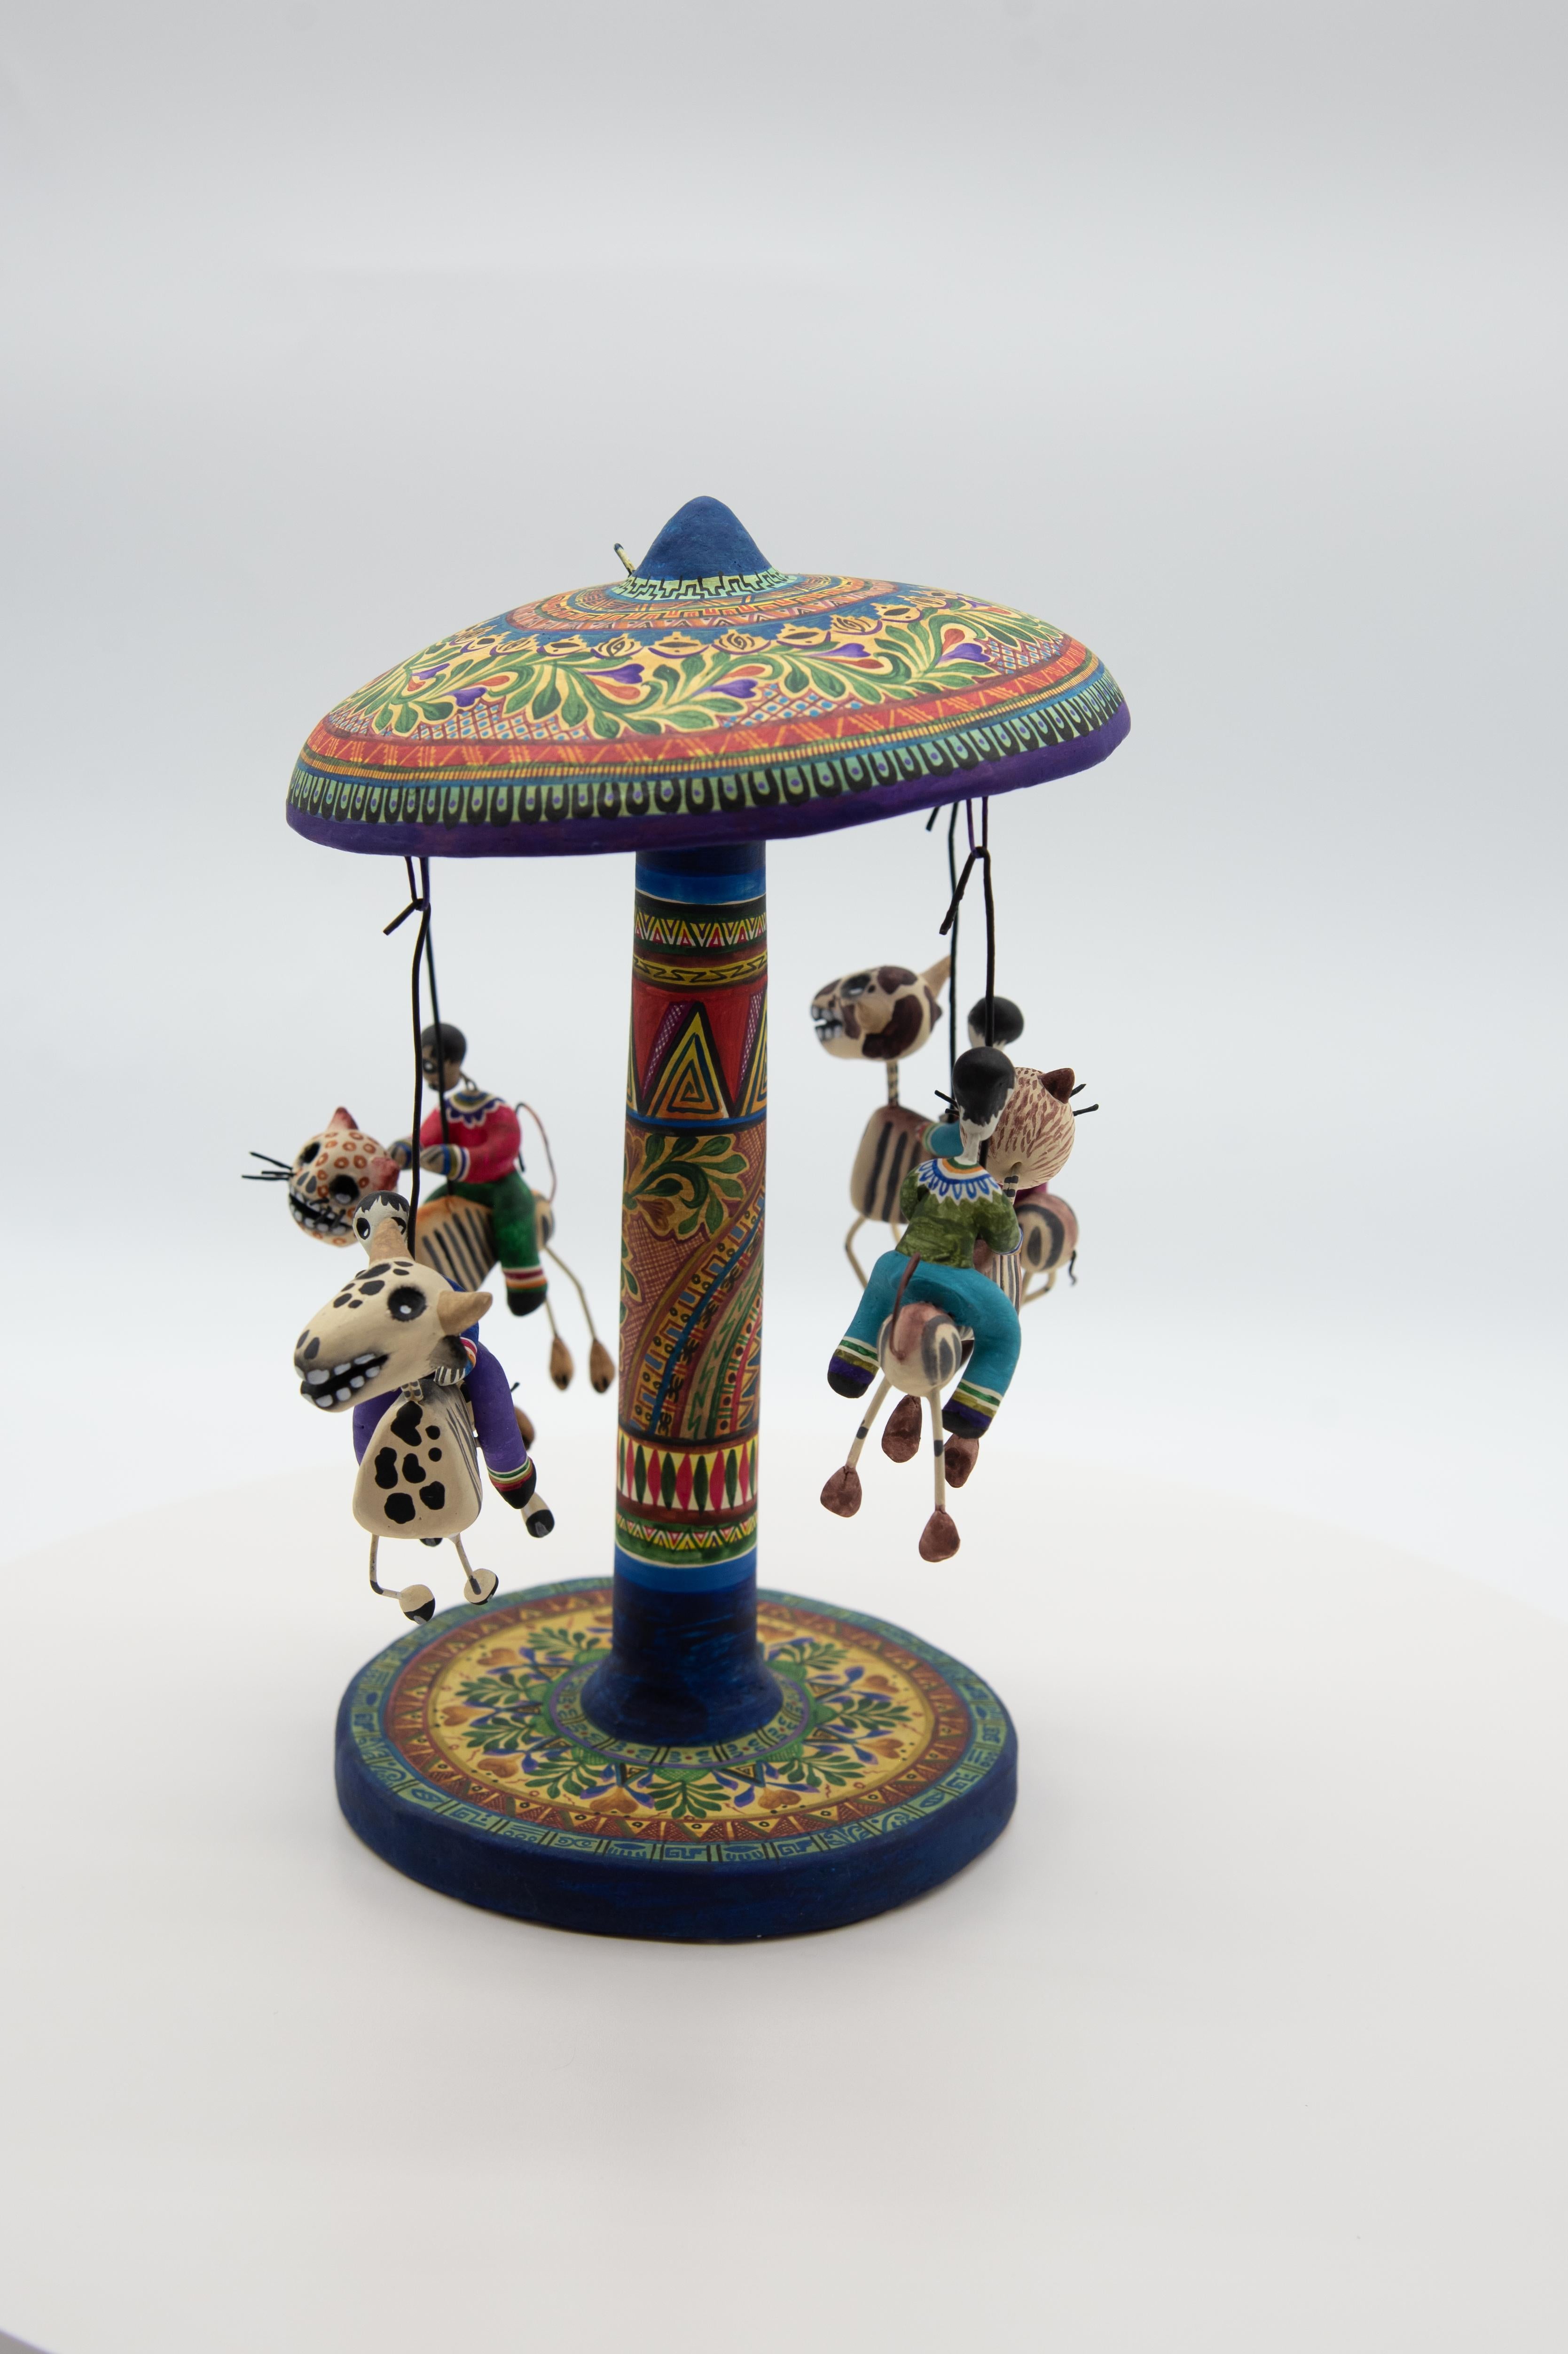 Carousel Day of the Dead Ceramic Mexican Folk Art by Familia Castillo  For Sale 9